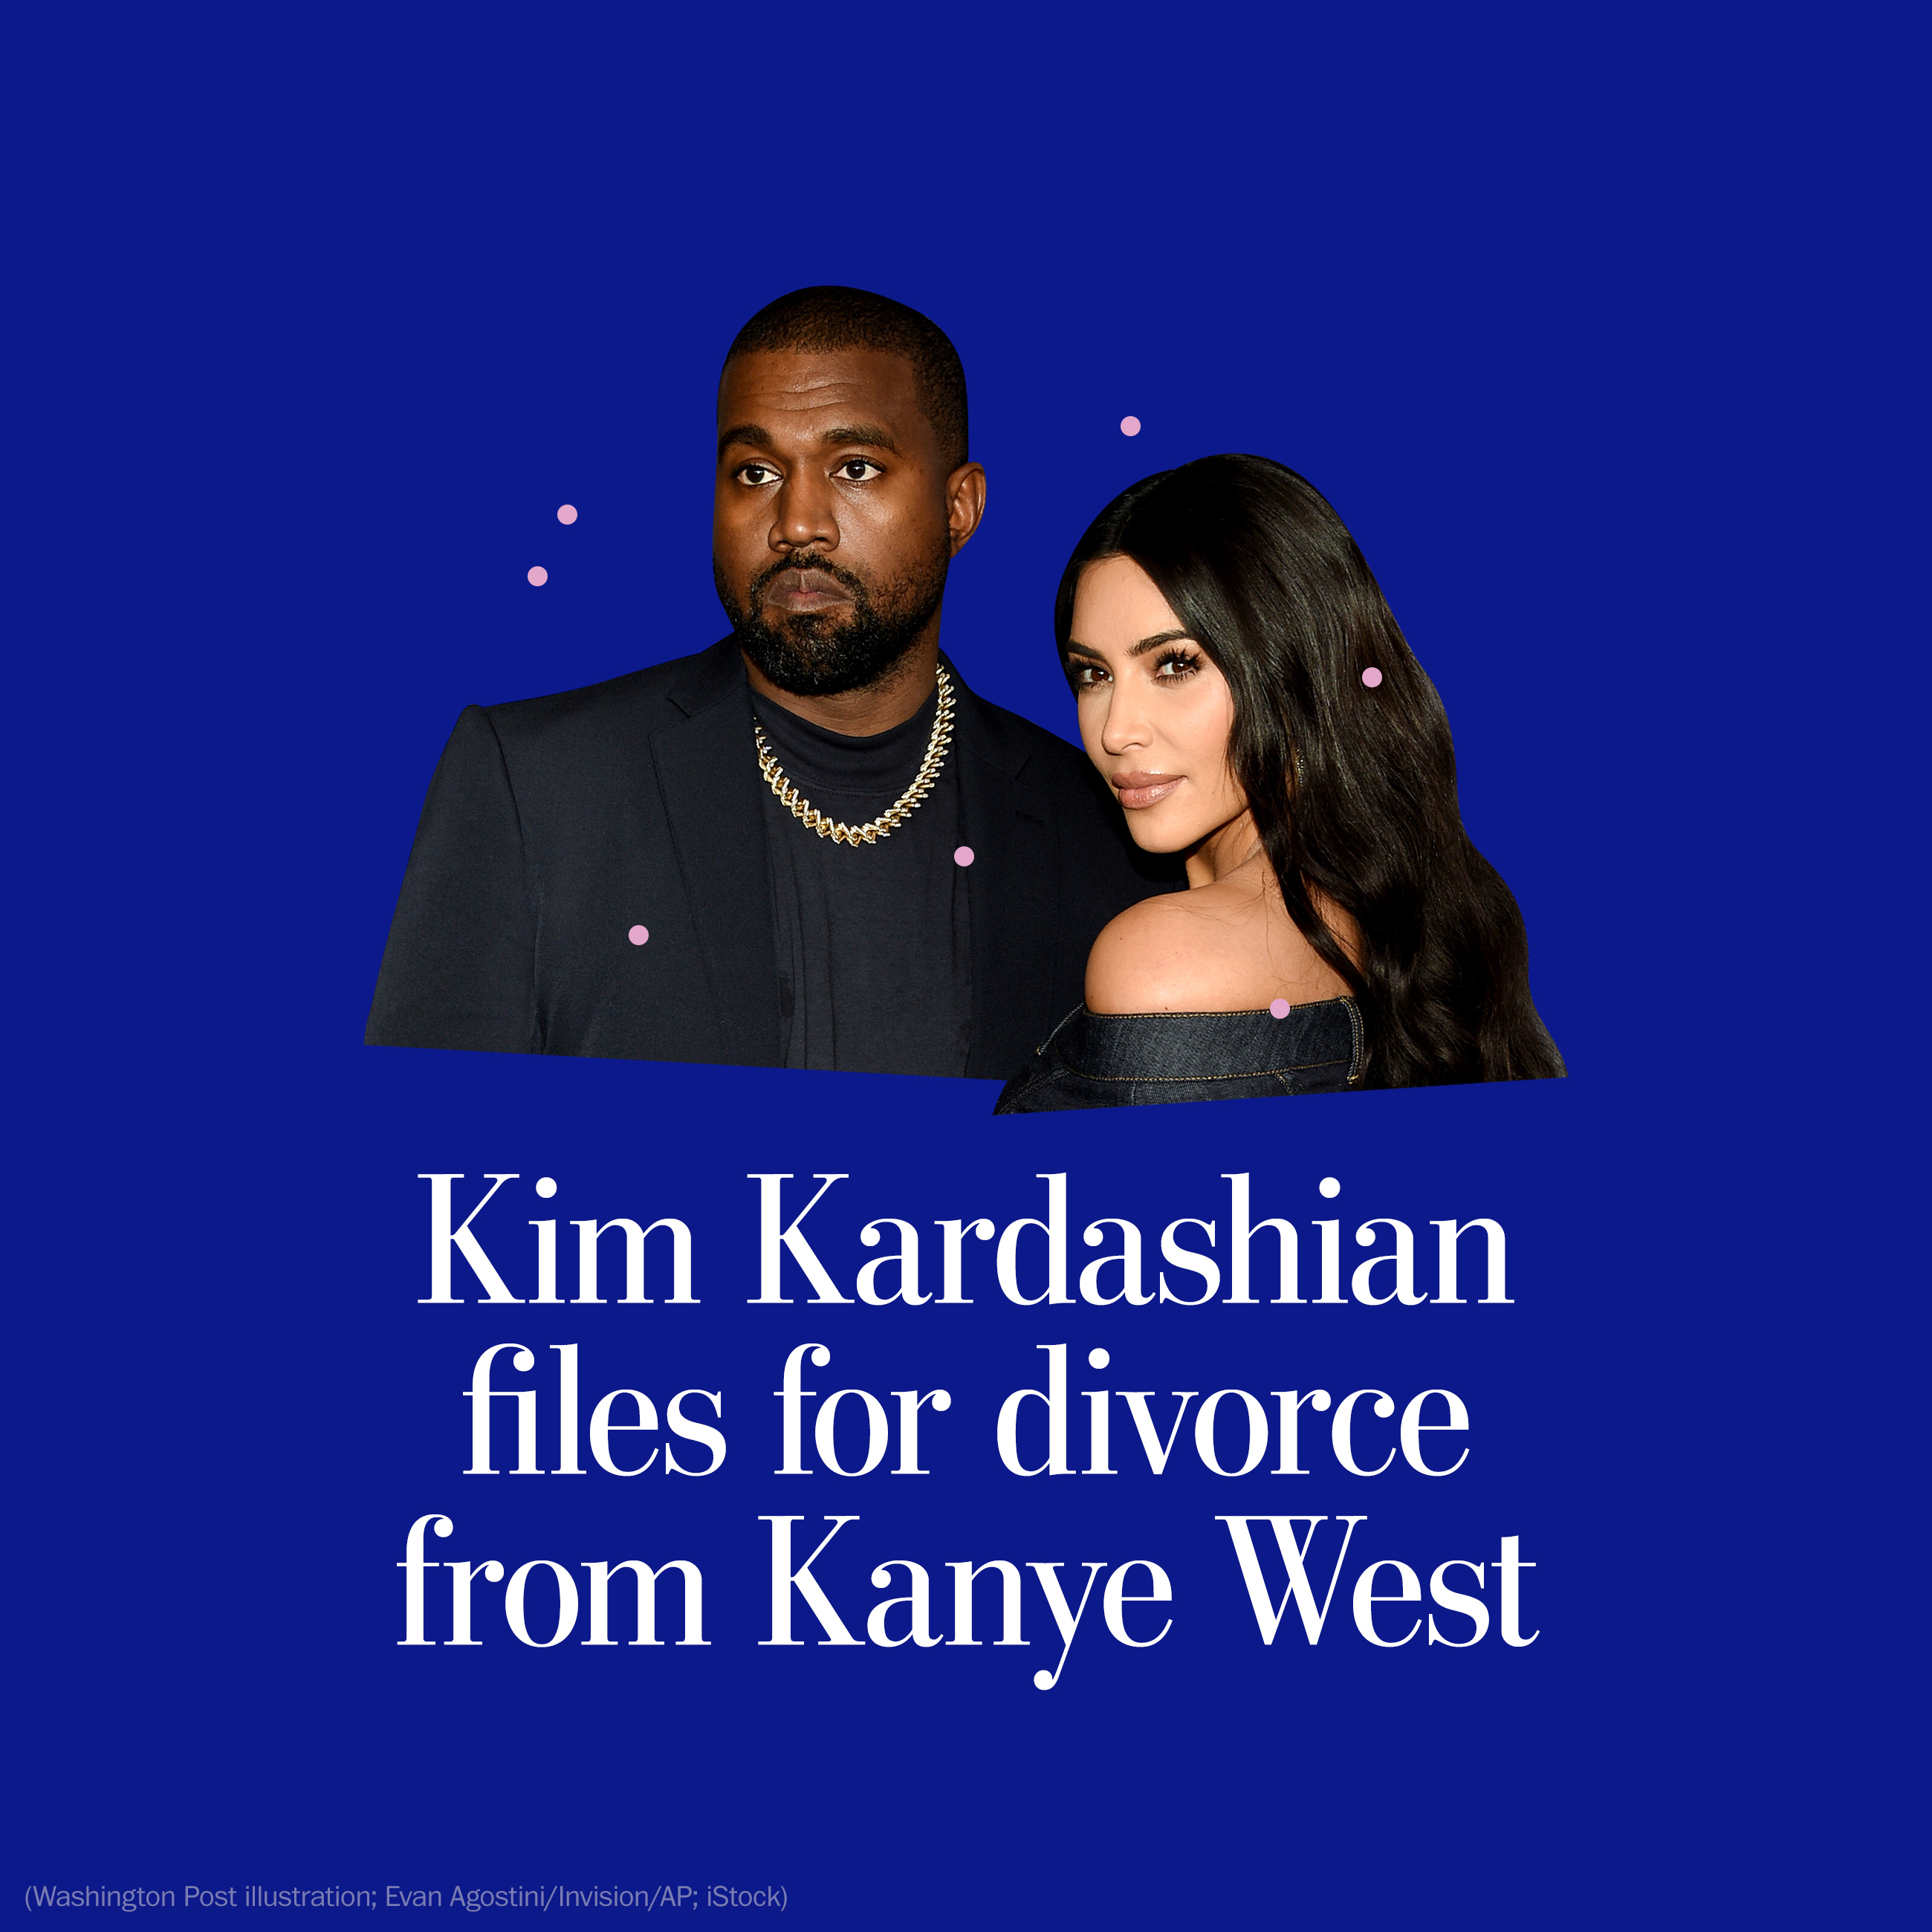 Kim Kardashian Files For Divorce From Kanye West Laptrinhx News 